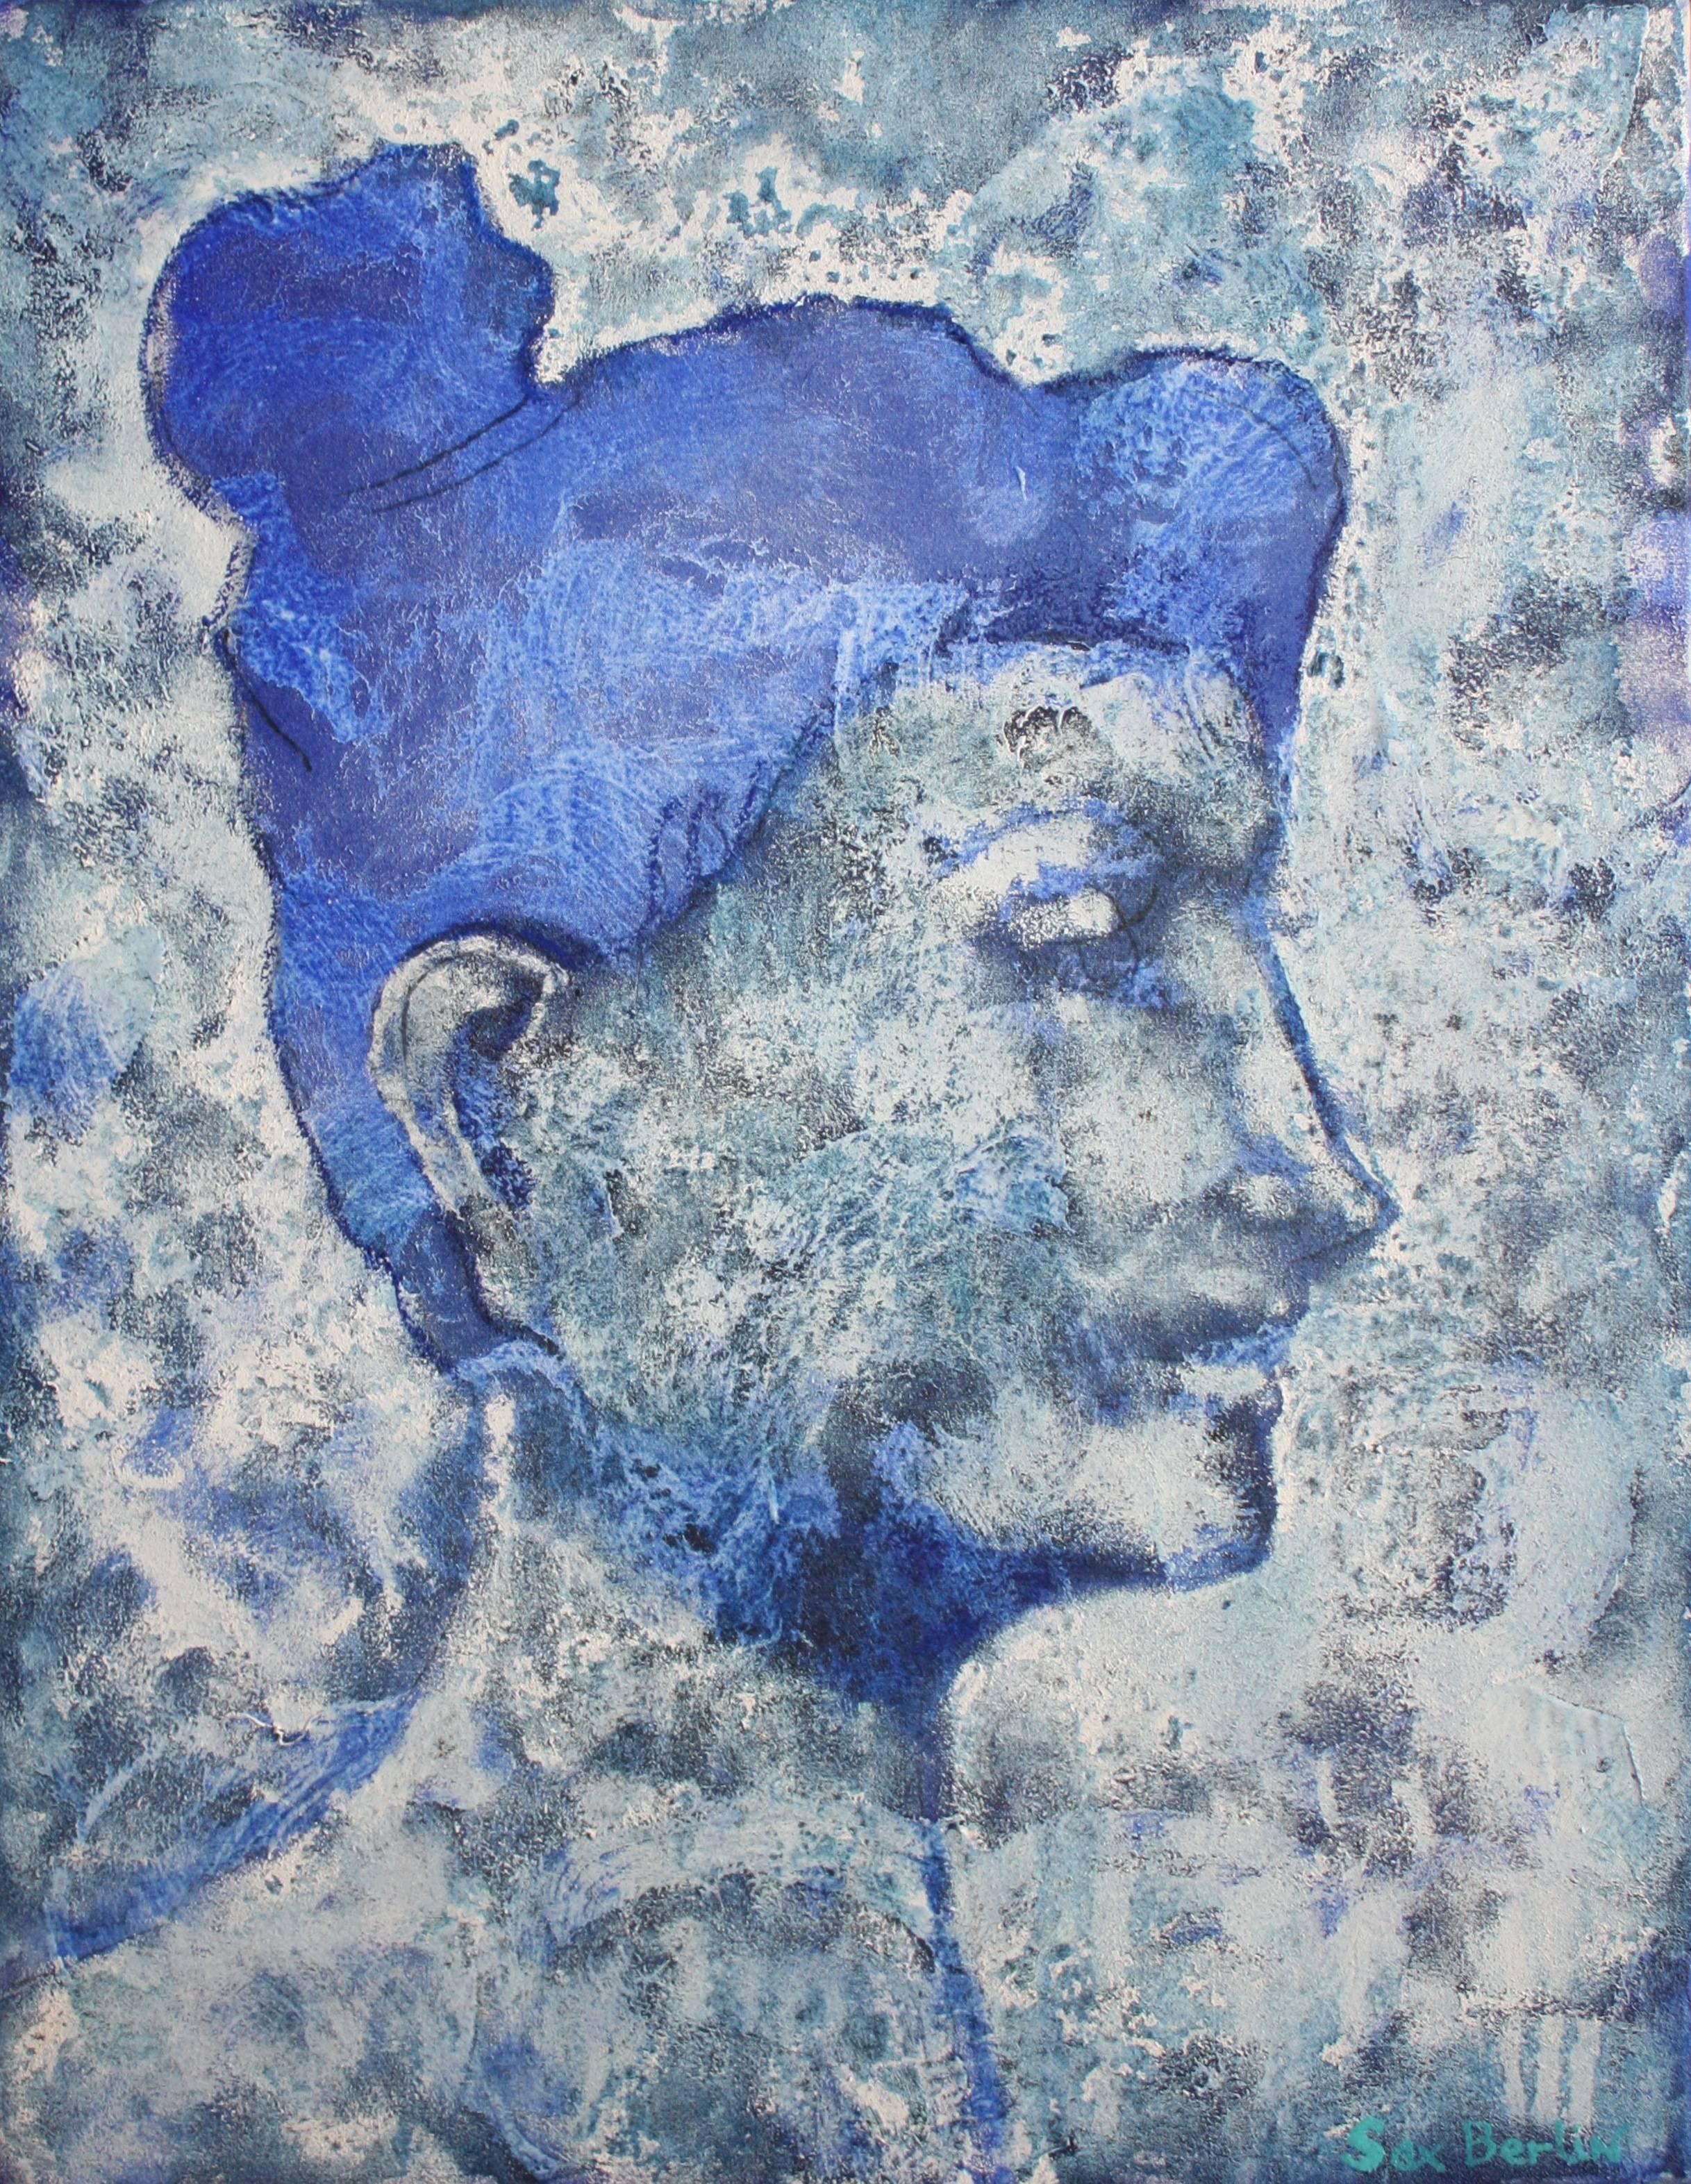 Sax Berlin Figurative Painting – Classic Blue. Zeitgenössisches figuratives Ölgemälde